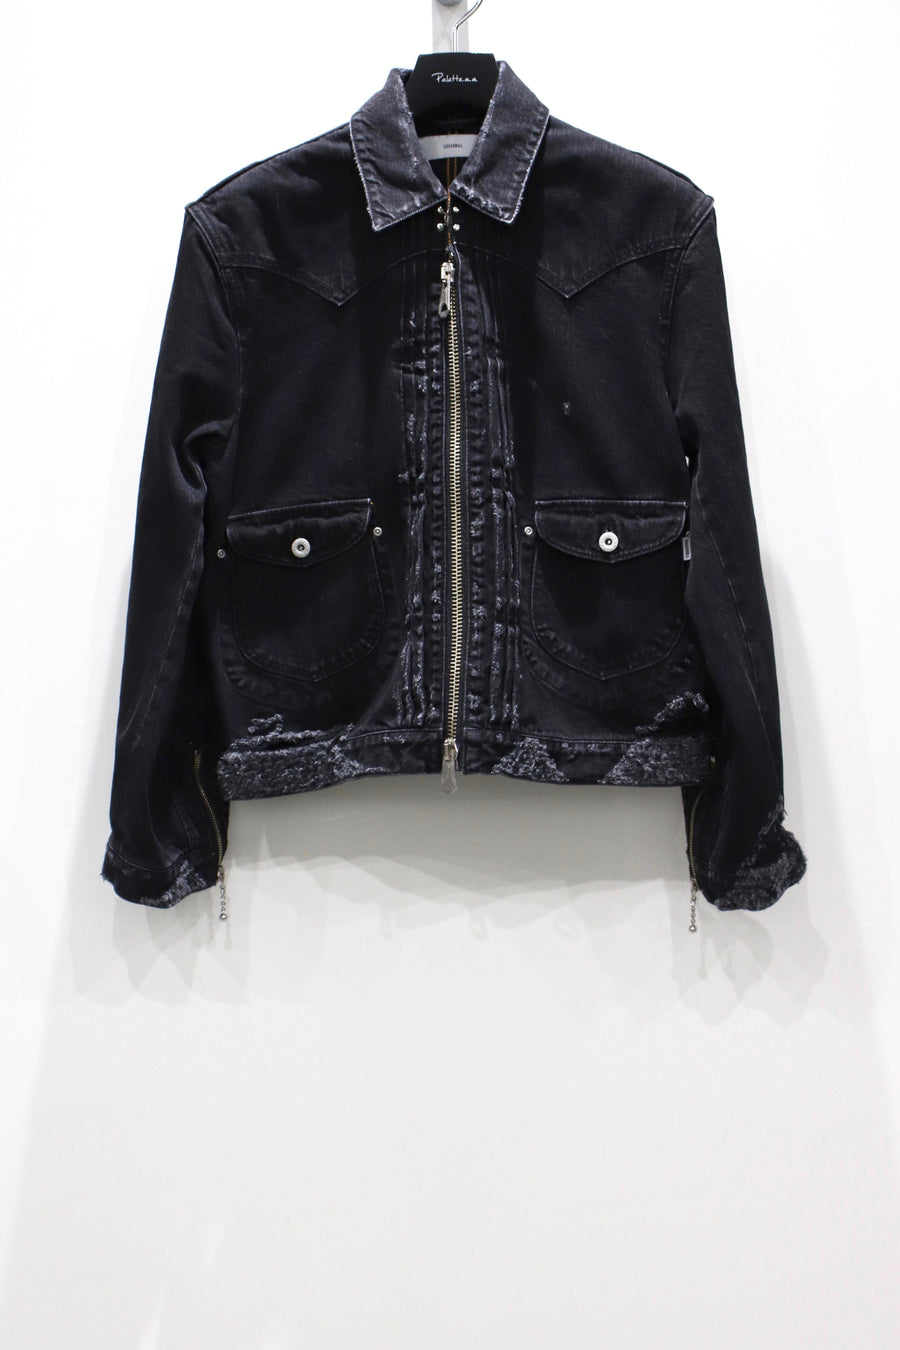 SUGARHILL  Zip-up Damaged Jacket(BLACK)